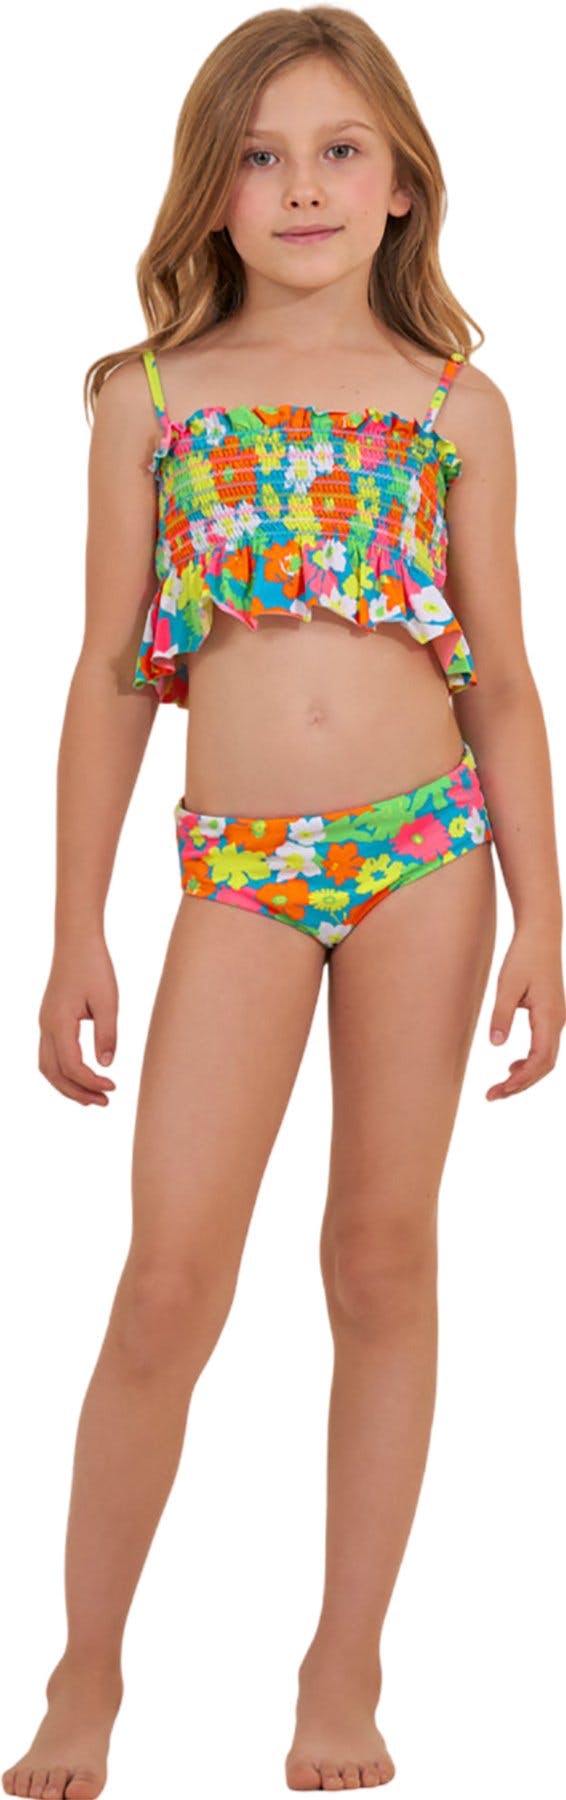 Product image for 90Floral Fiesta Bikini Set - Girls 